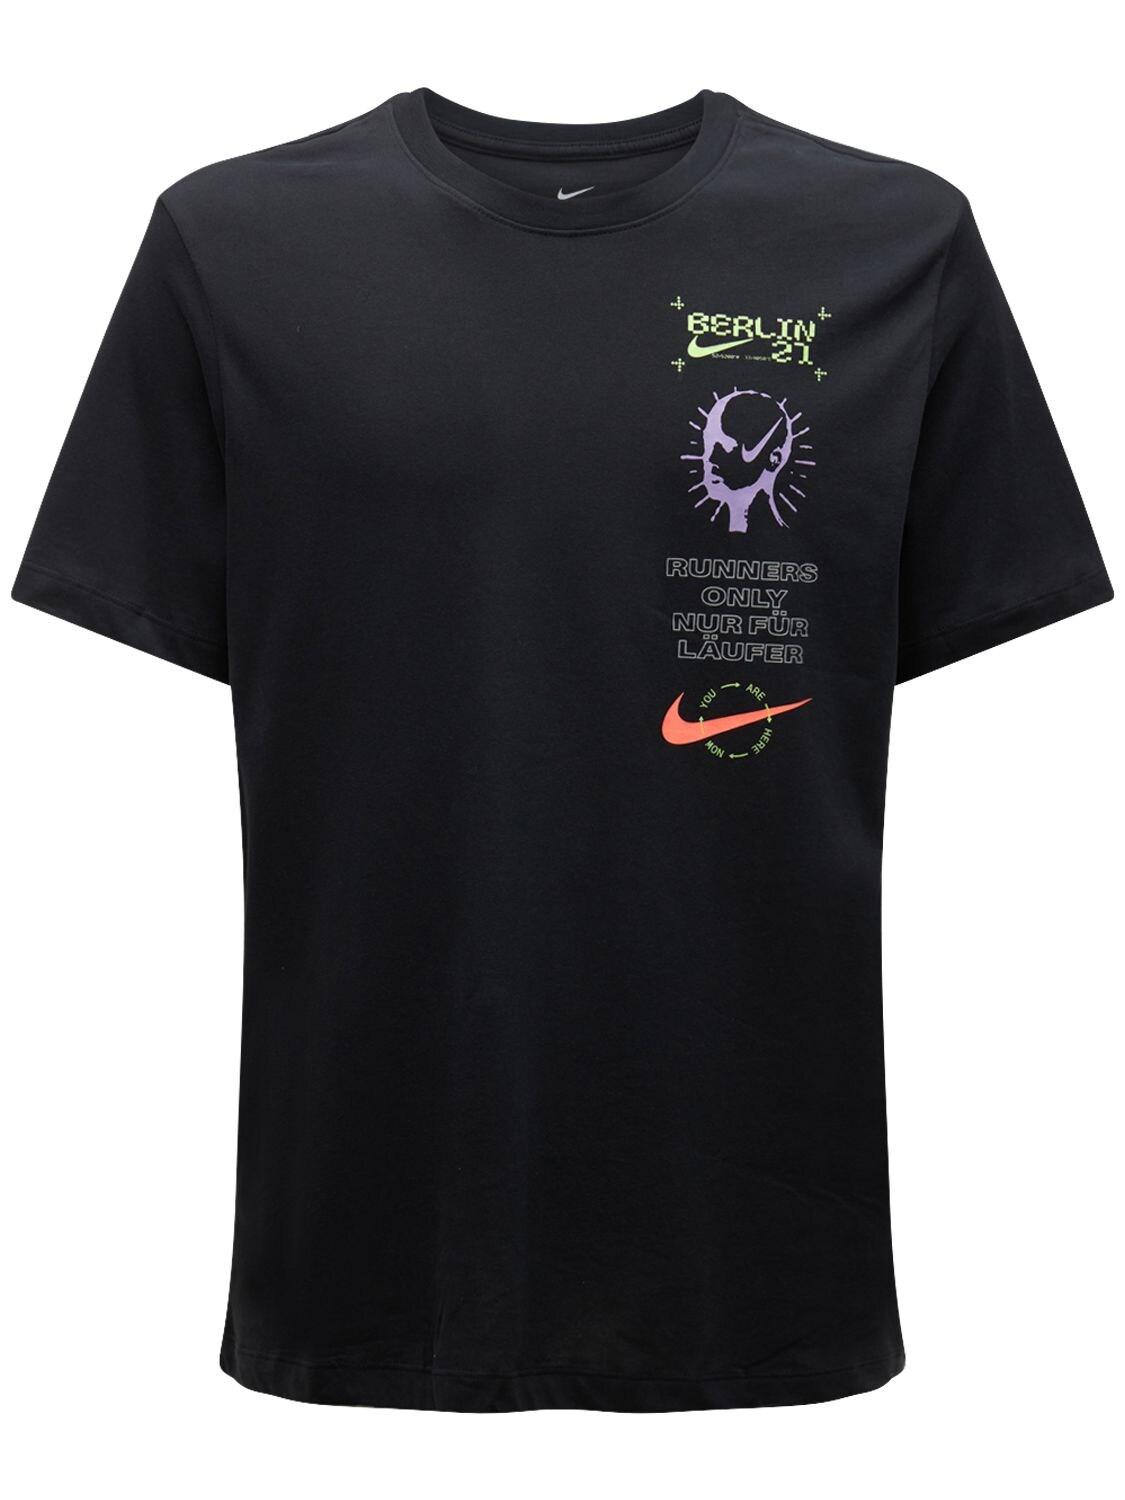 Nike Dri-fit Berlin T-shirt in Black for Men | Lyst